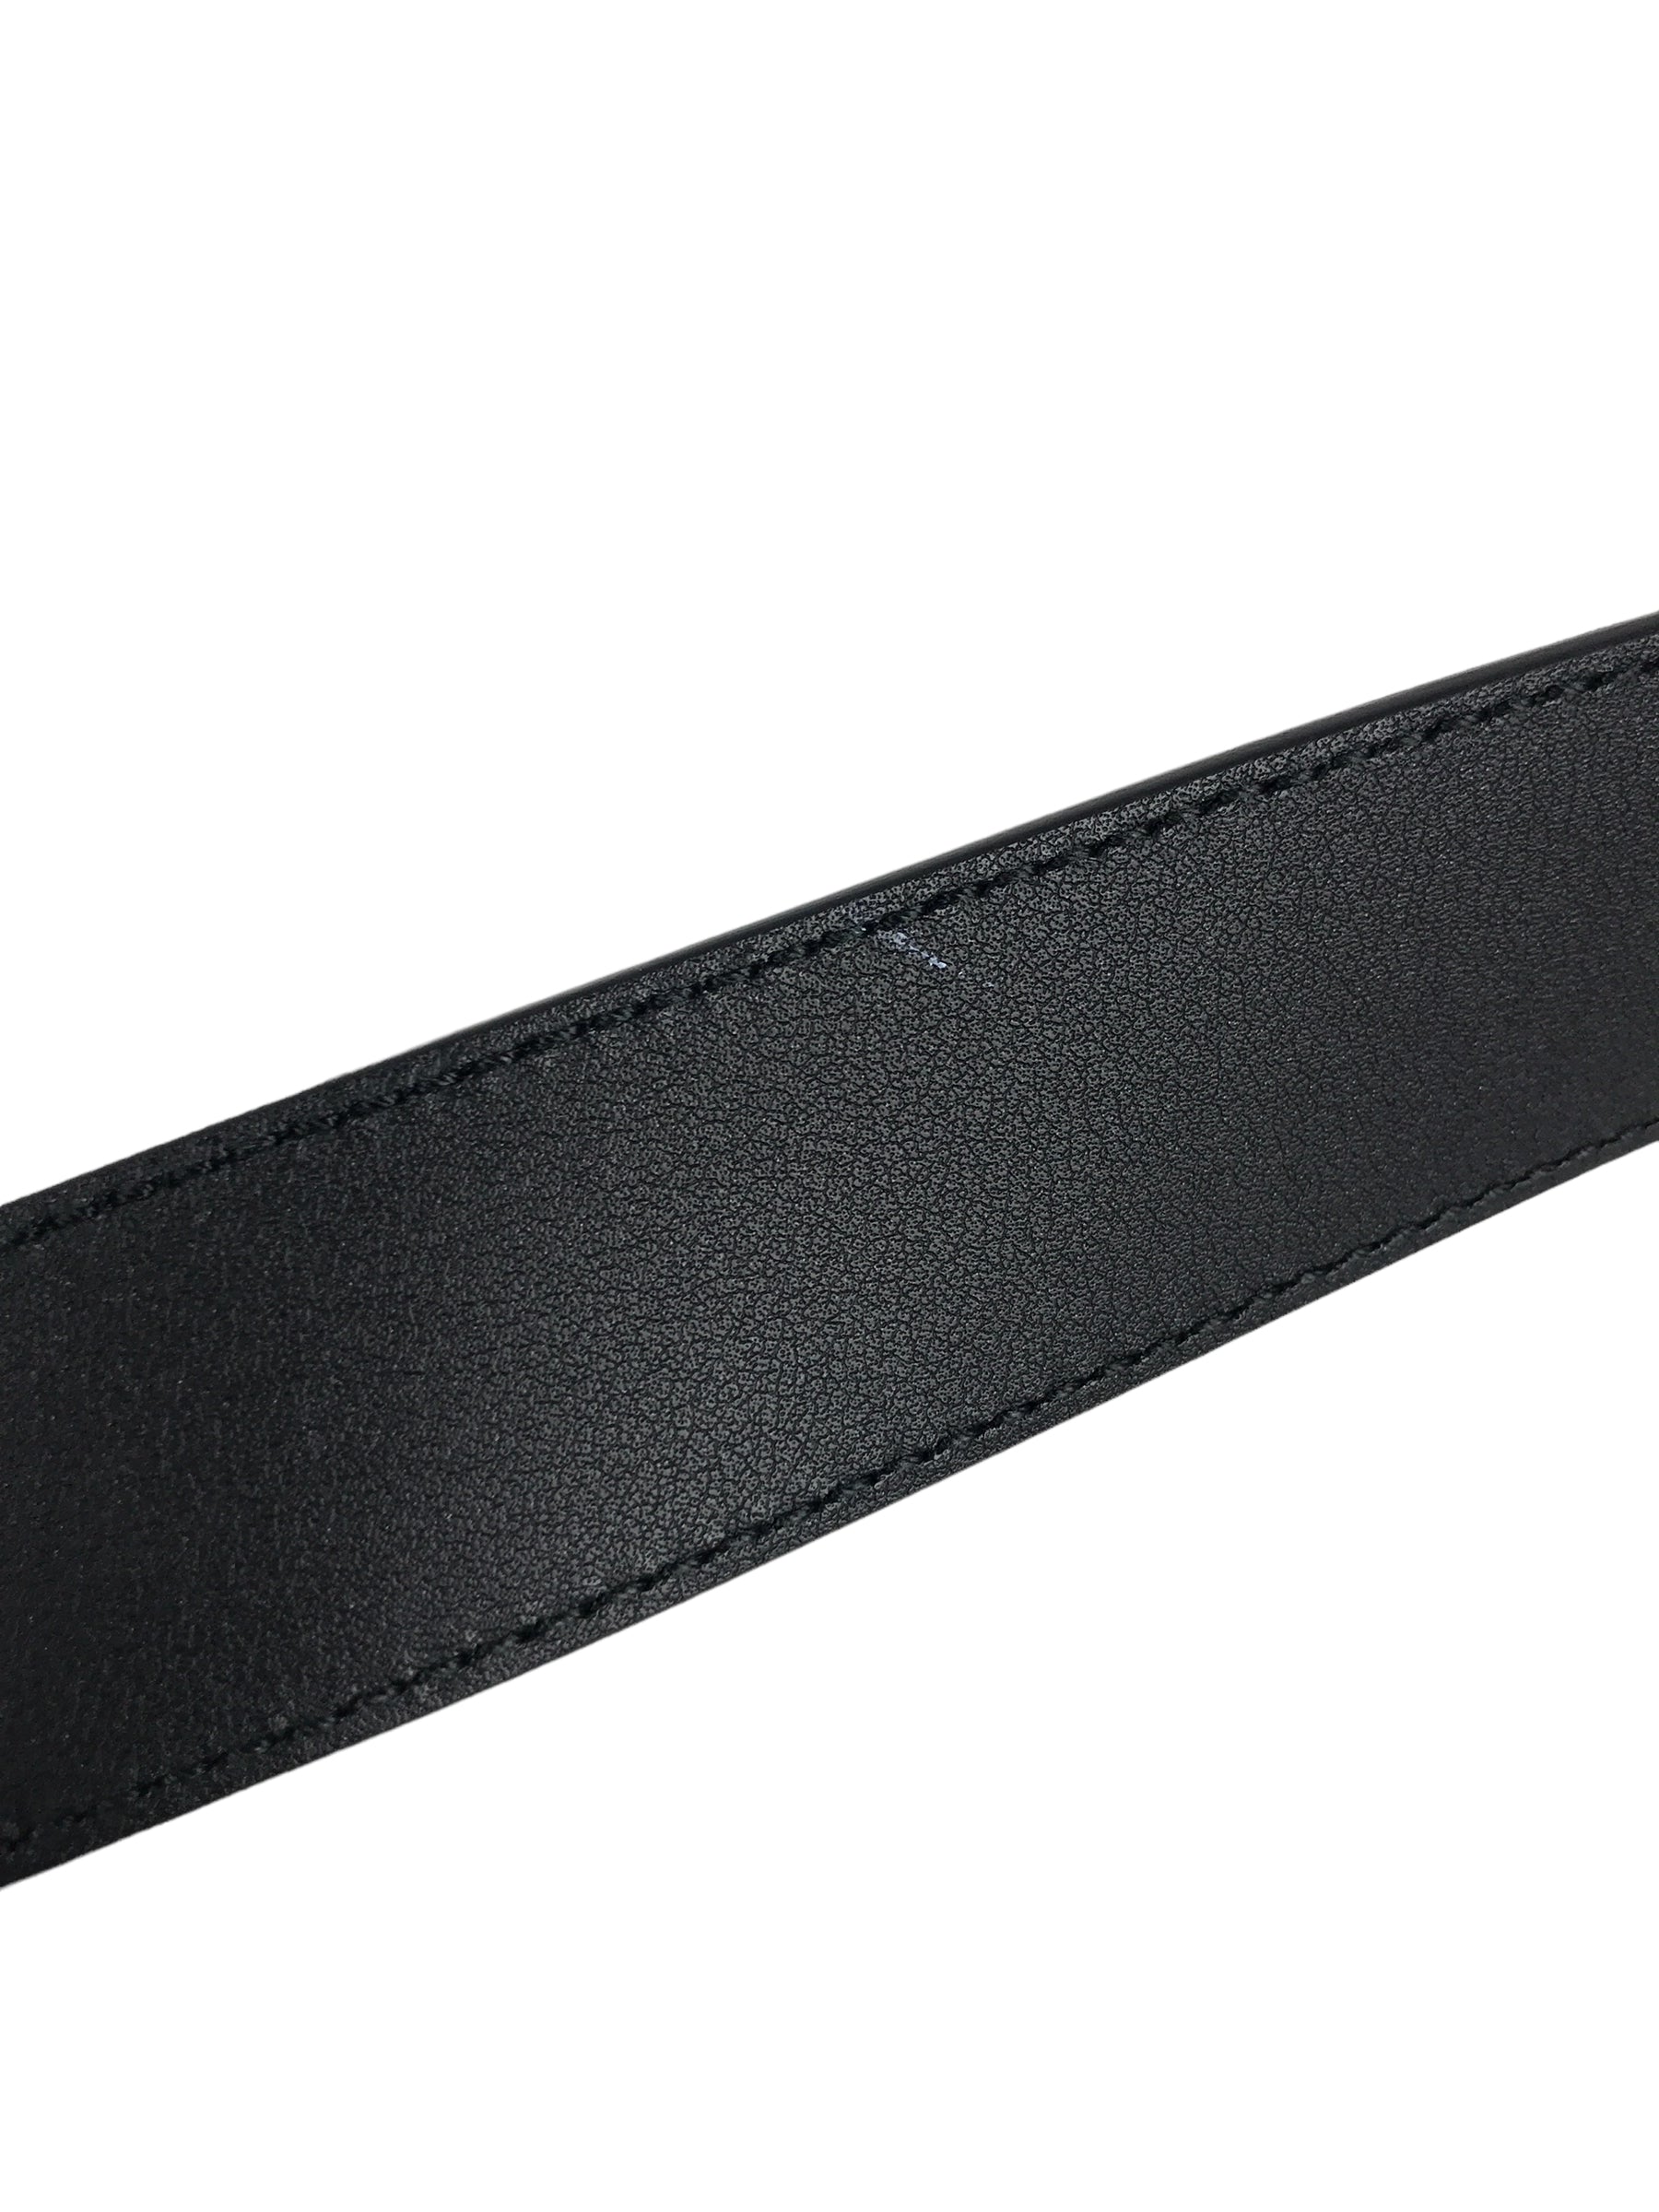 GG Logo Black Leather Belt w/AGW